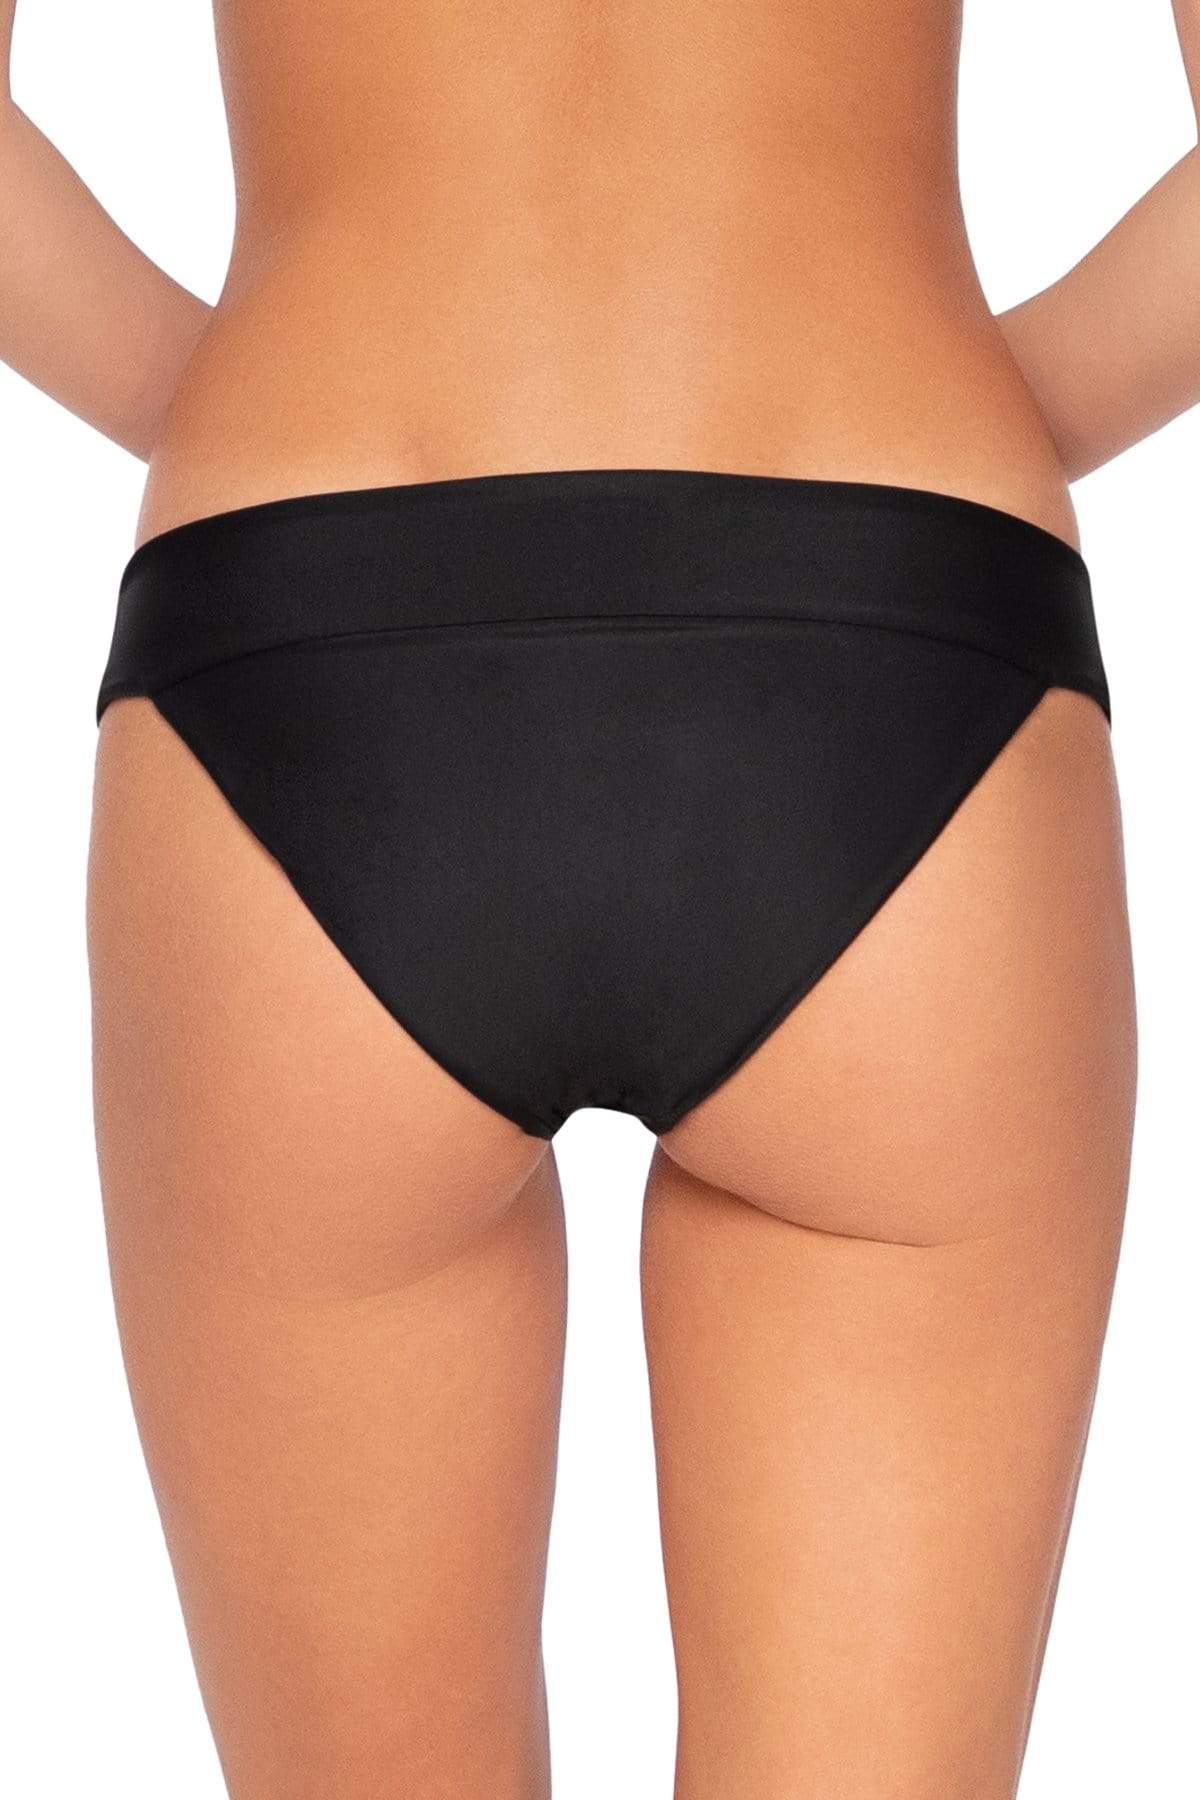 Bestswimwear -  Swim Systems Black  Bliss Banded Bottom